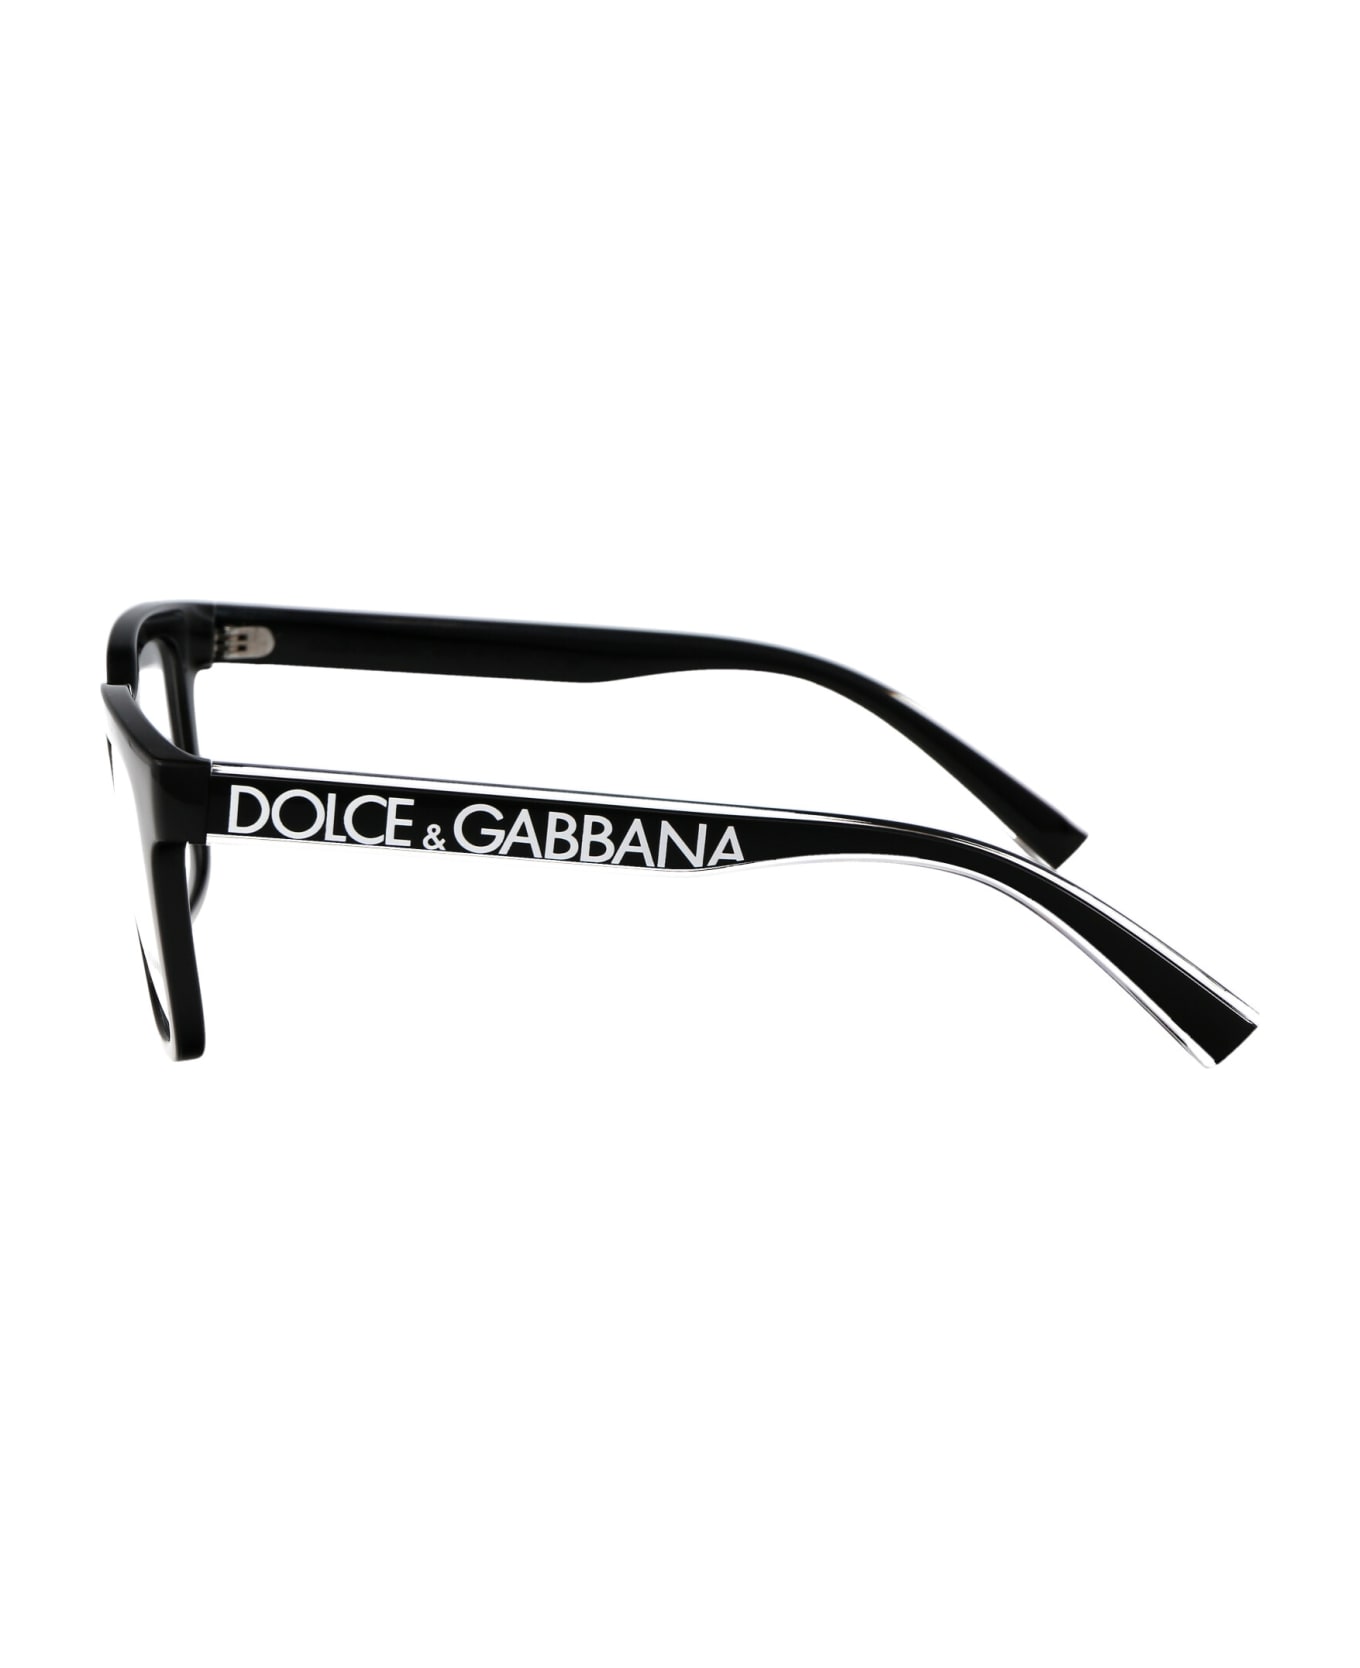 Dolce & Gabbana Eyewear 0dg5101 Glasses - 501 BLACK アイウェア